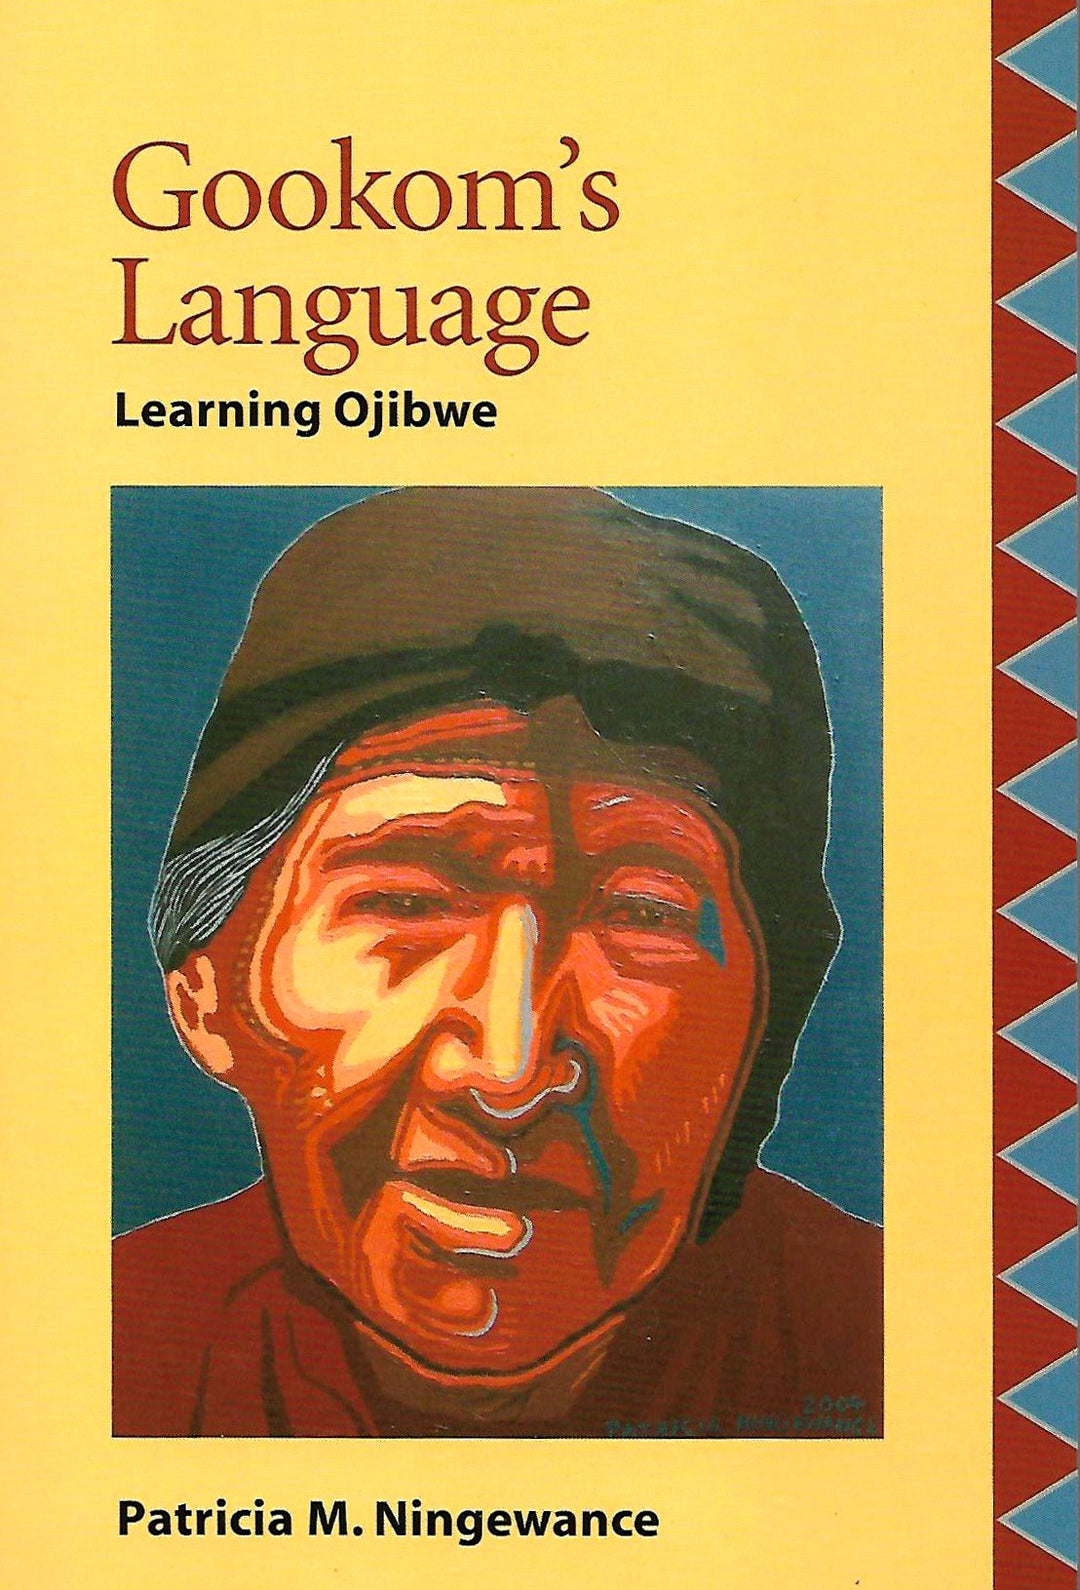 Gookom's Language: Learning Ojibwe by Patricia M. Ningewance